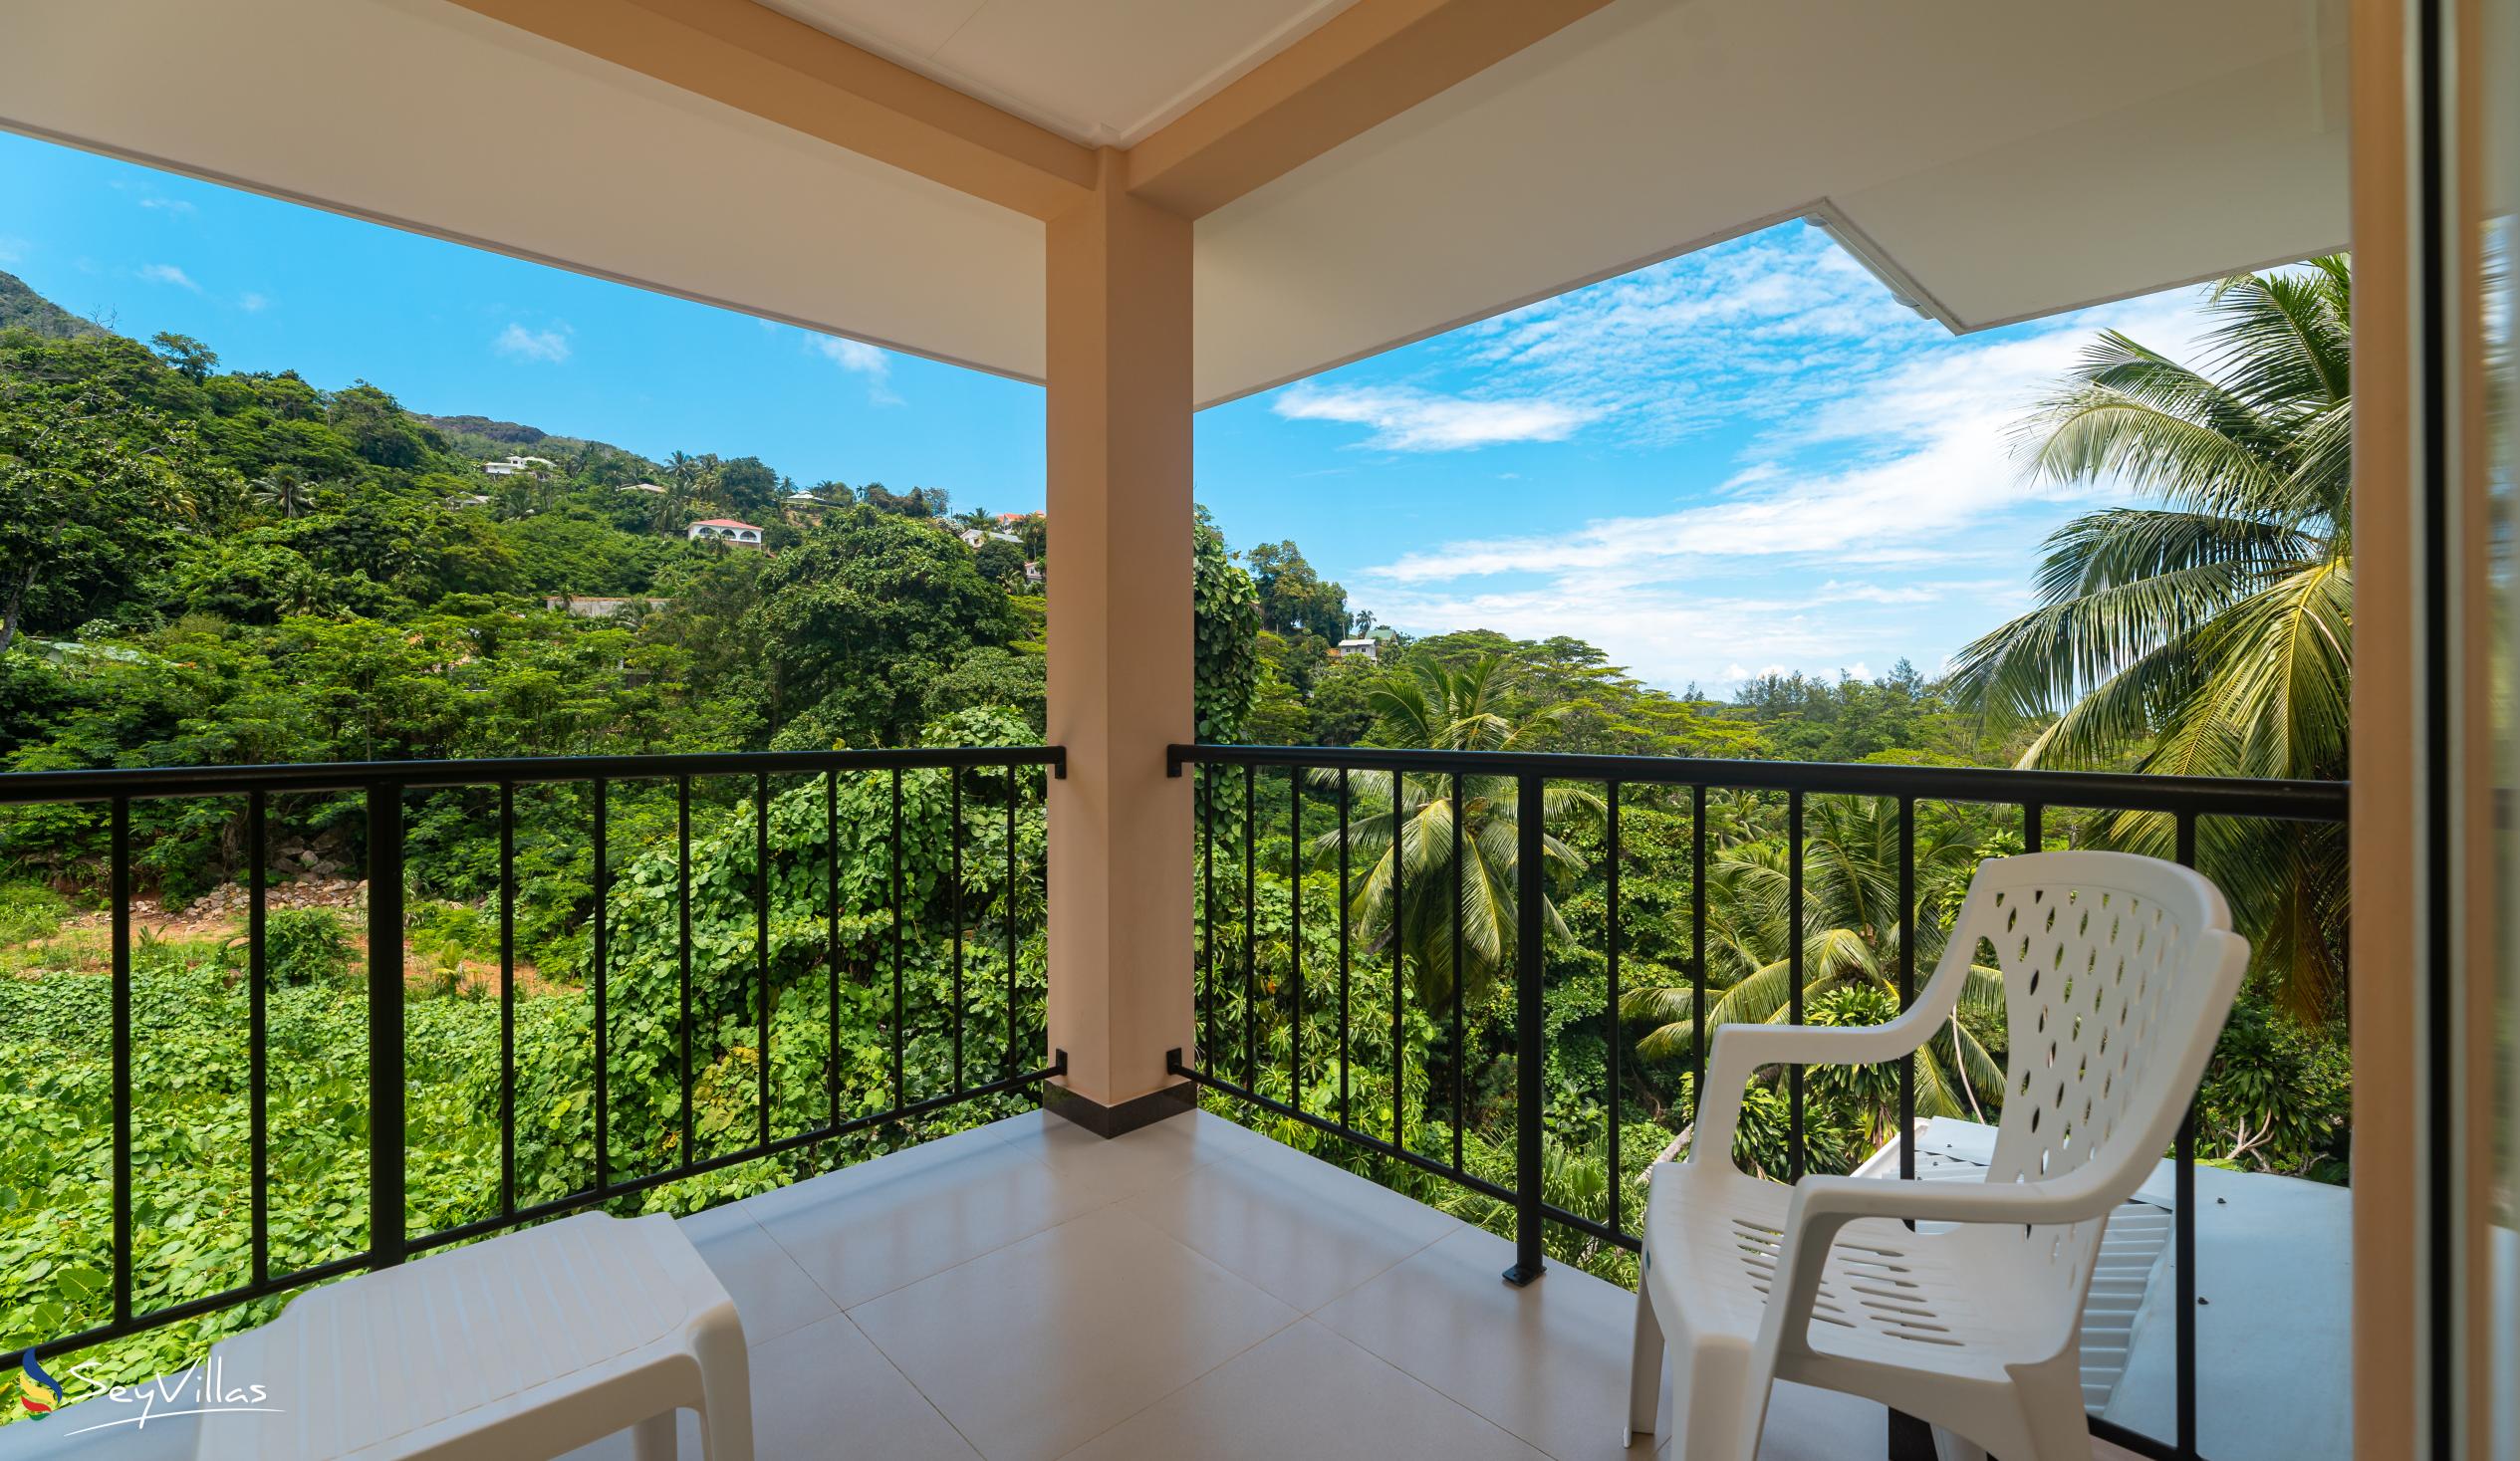 Foto 59: JAIDSS Holiday Apartments - Appartamento con 2 camere - Mahé (Seychelles)